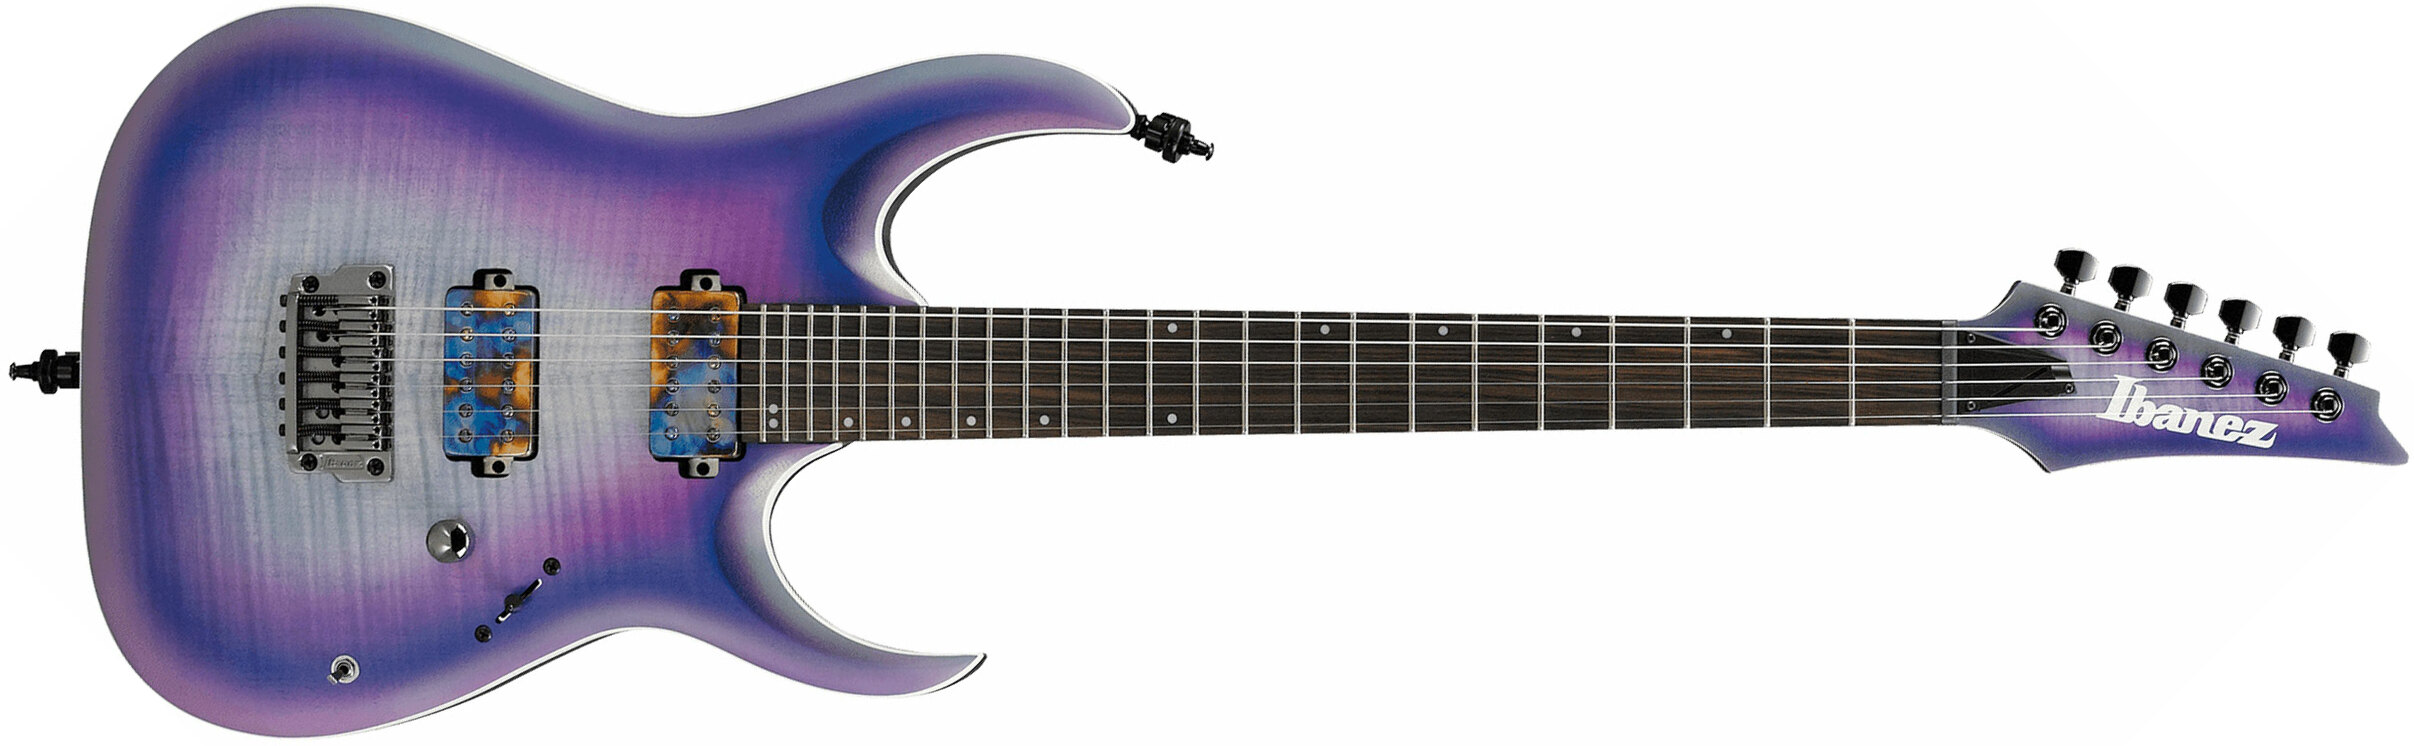 Ibanez Rga61al Iaf Axion Label Hh Bare Knuckle Ht Eb - Indigo Aurora Burst Flat - Metal electric guitar - Main picture